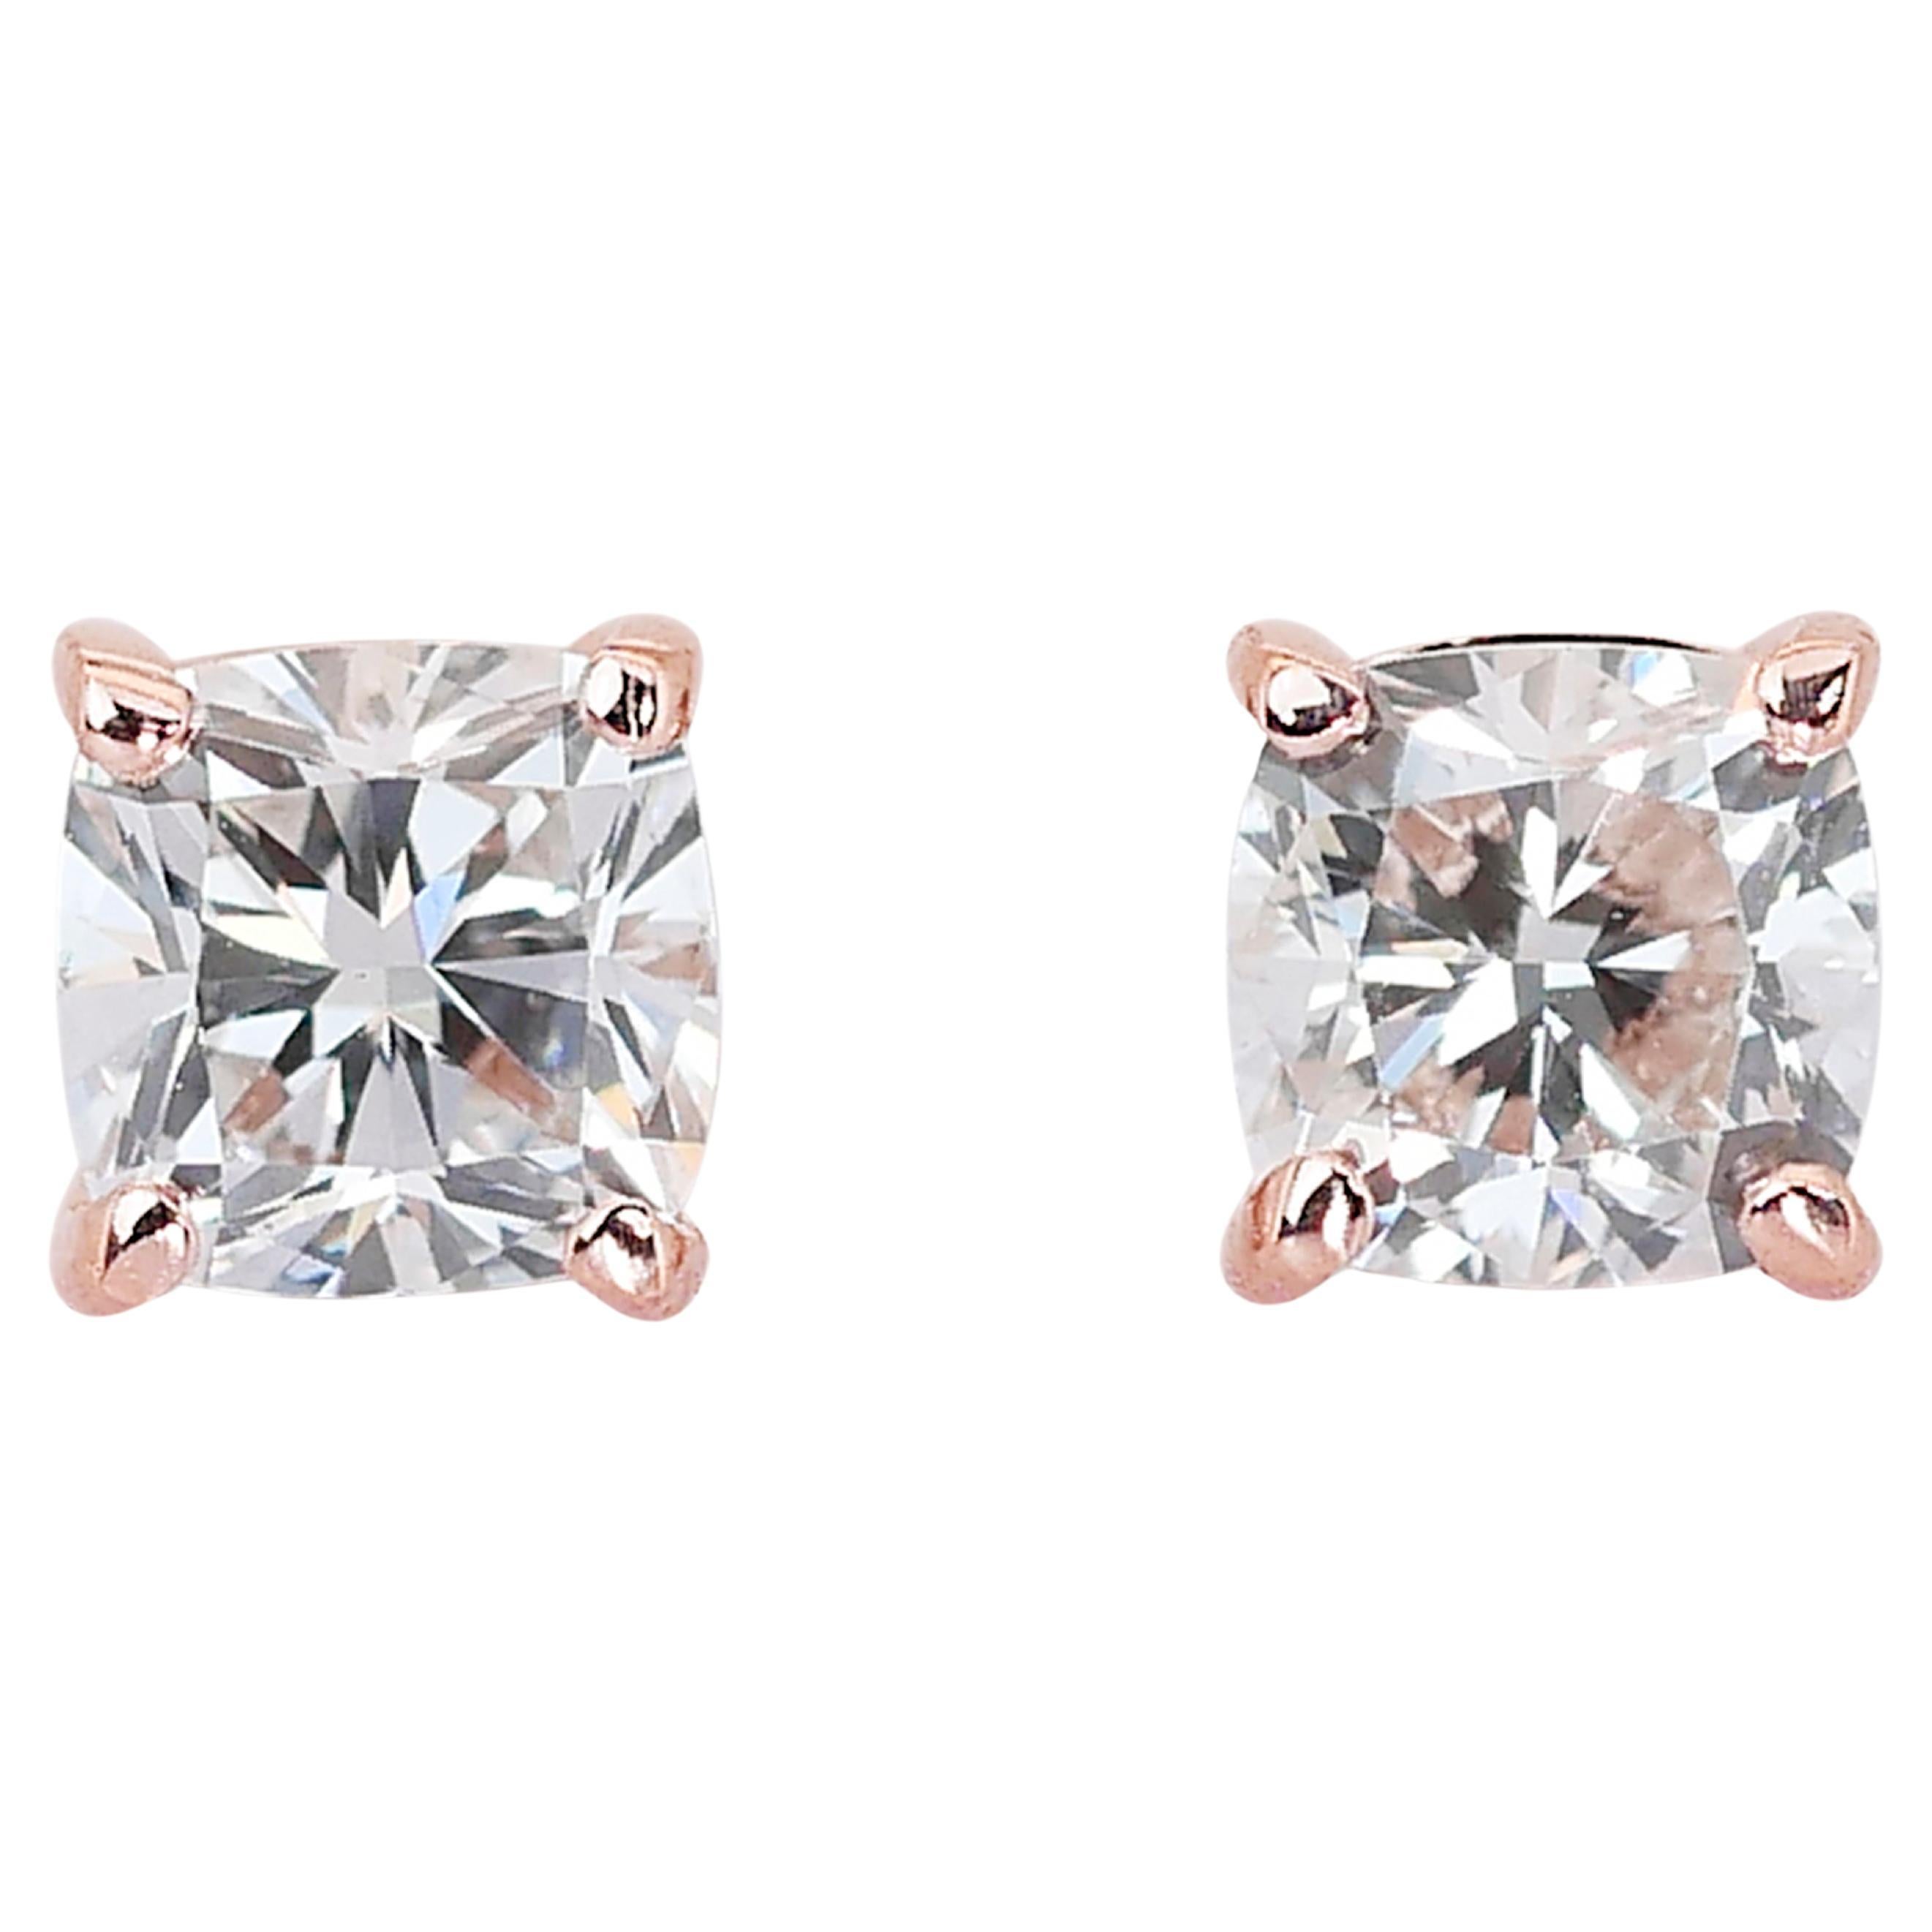 Stunning 14k Rose Gold Natural Diamonds Stud Earrings w/1.61 ct - IGI Certified